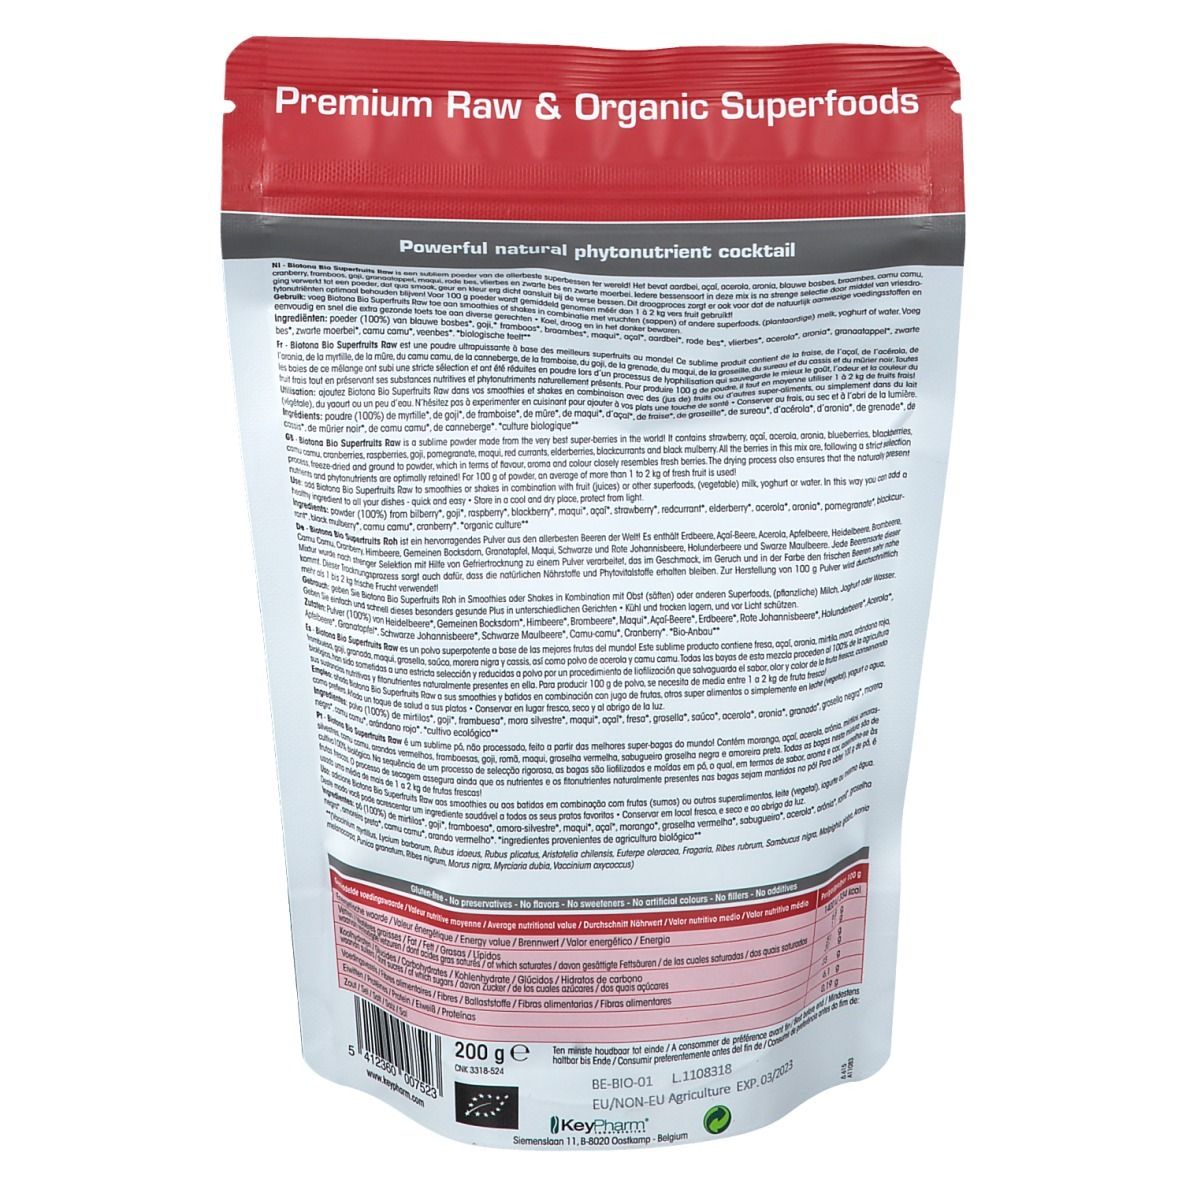 Biotona Superfruits Raw Powder